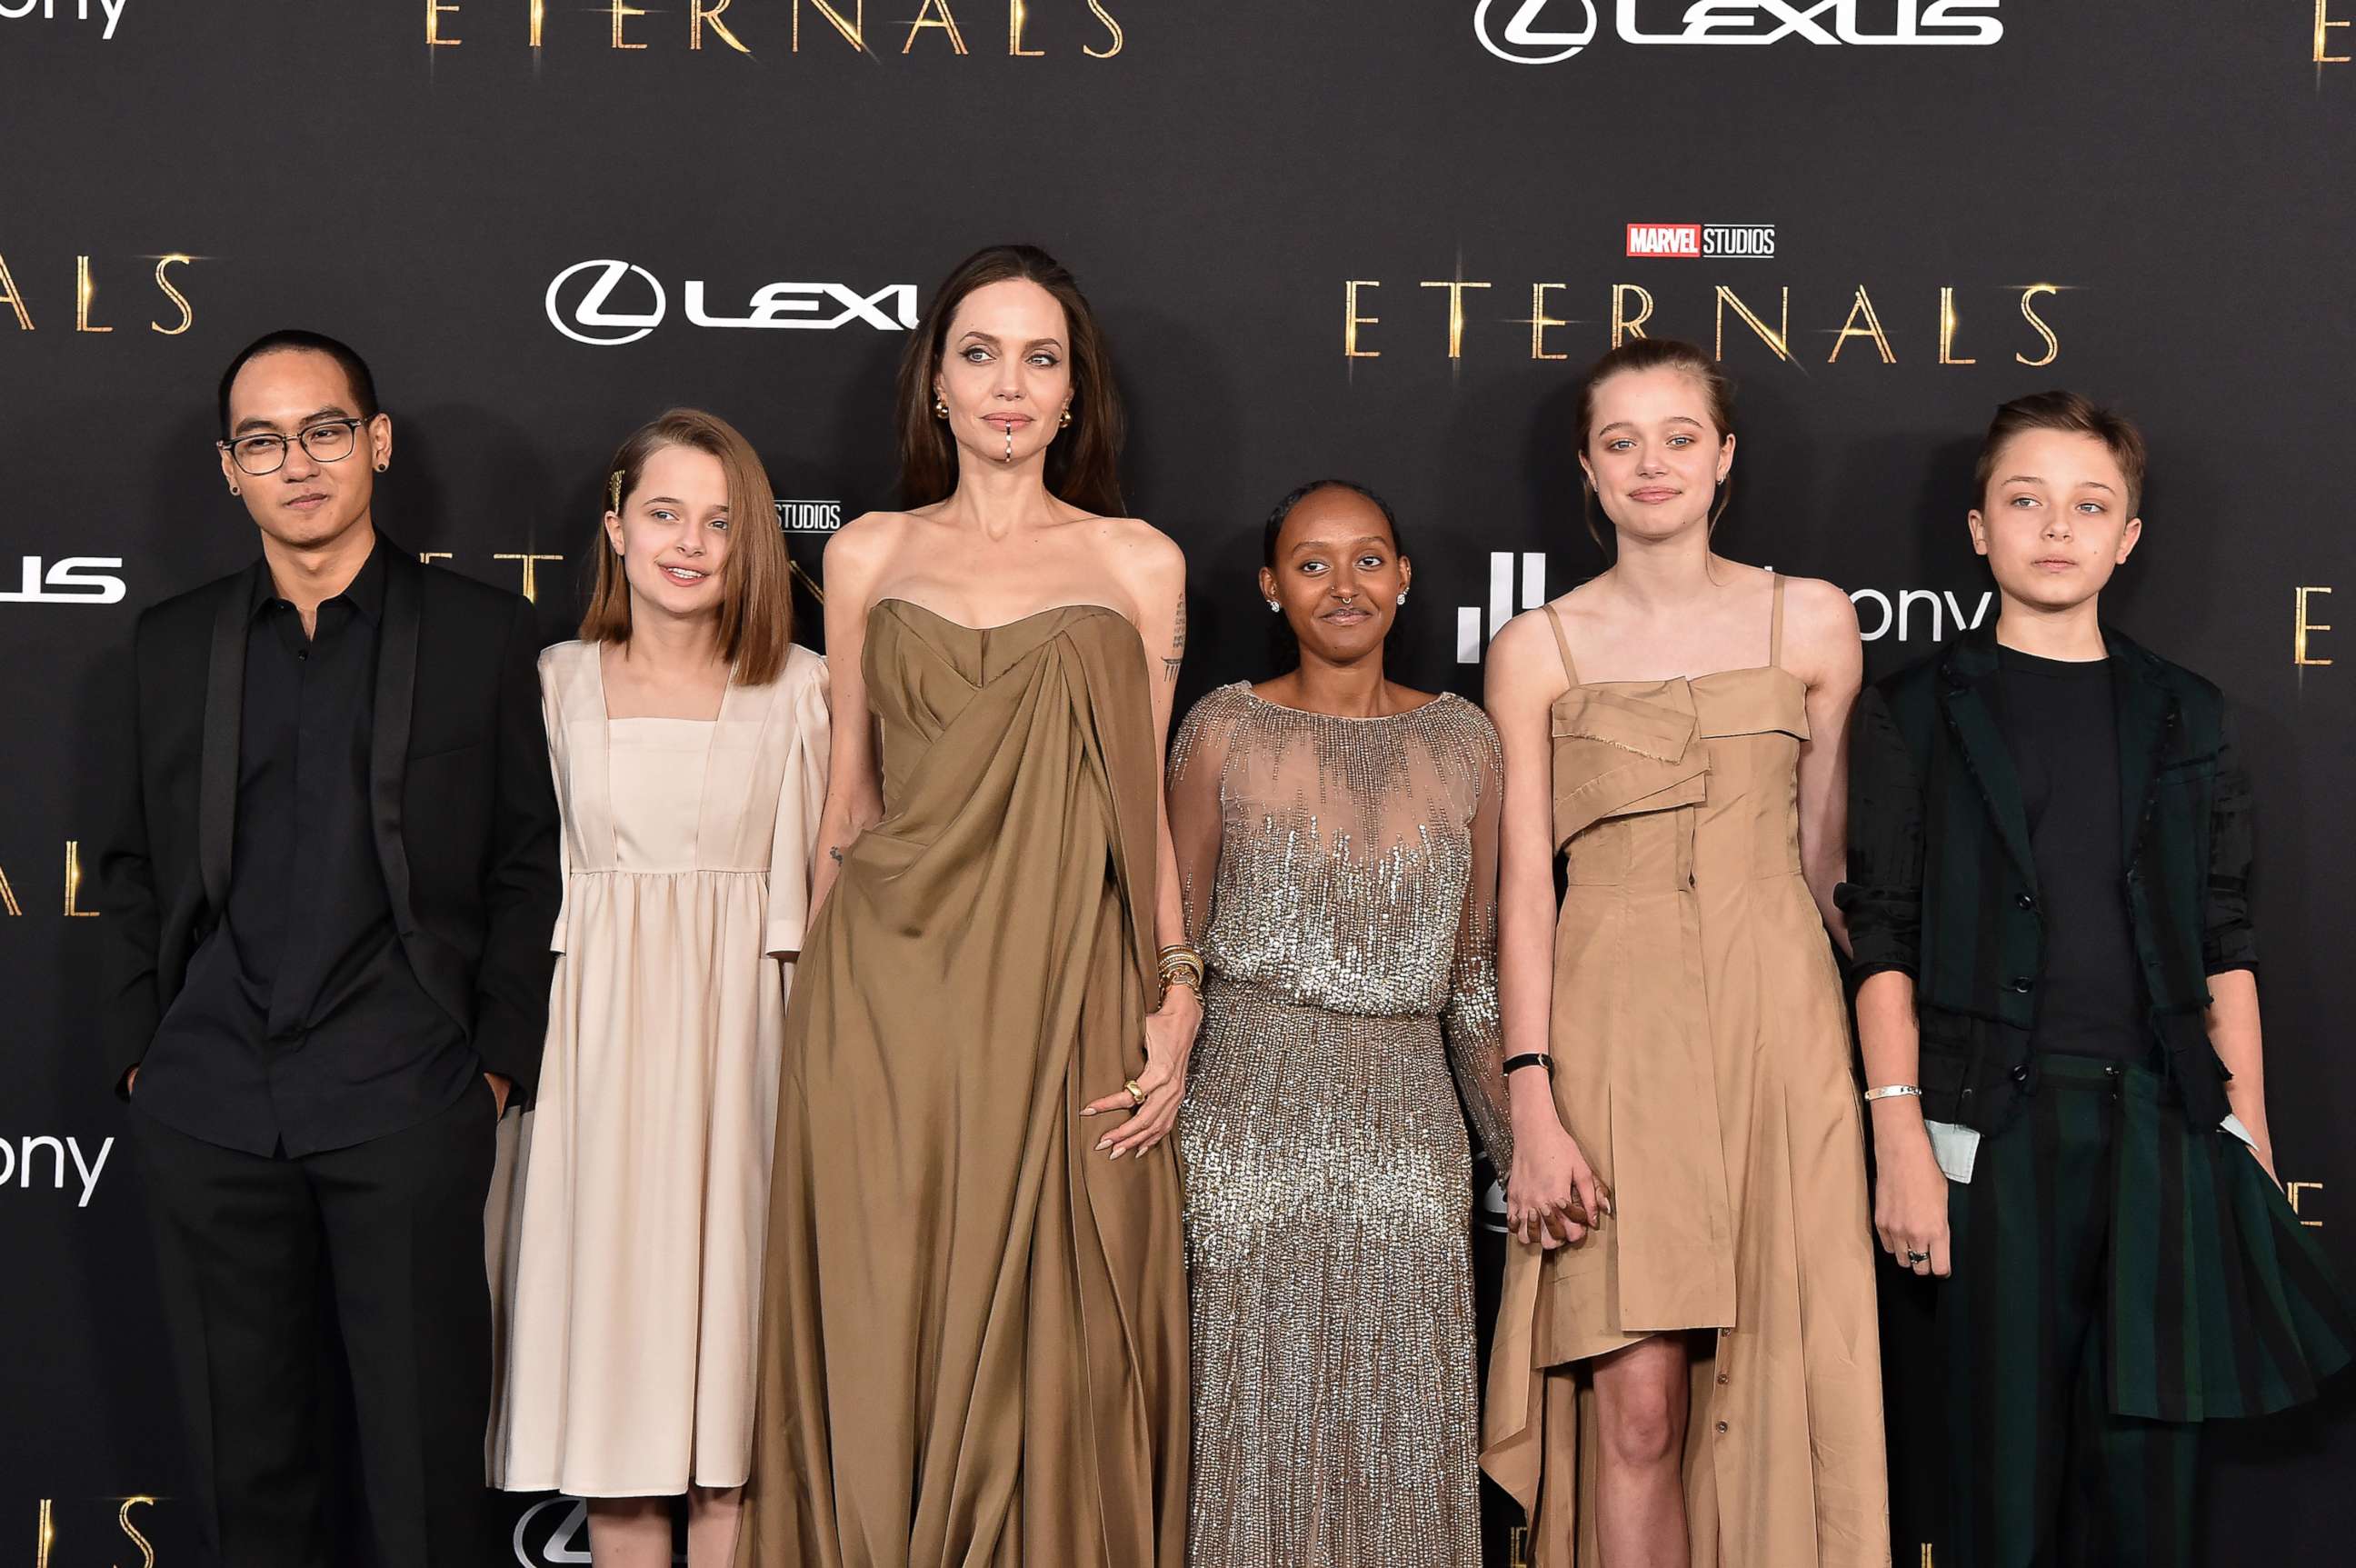 PHOTO: Maddox Jolie-Pitt, Vivienne Jolie-Pitt, Angelina Jolie, Zahara Jolie-Pitt, Shiloh Jolie-Pitt and Knox Jolie-Pitt attend the premiere of 'Eternals" in Los Angeles, Oct. 18, 2021.